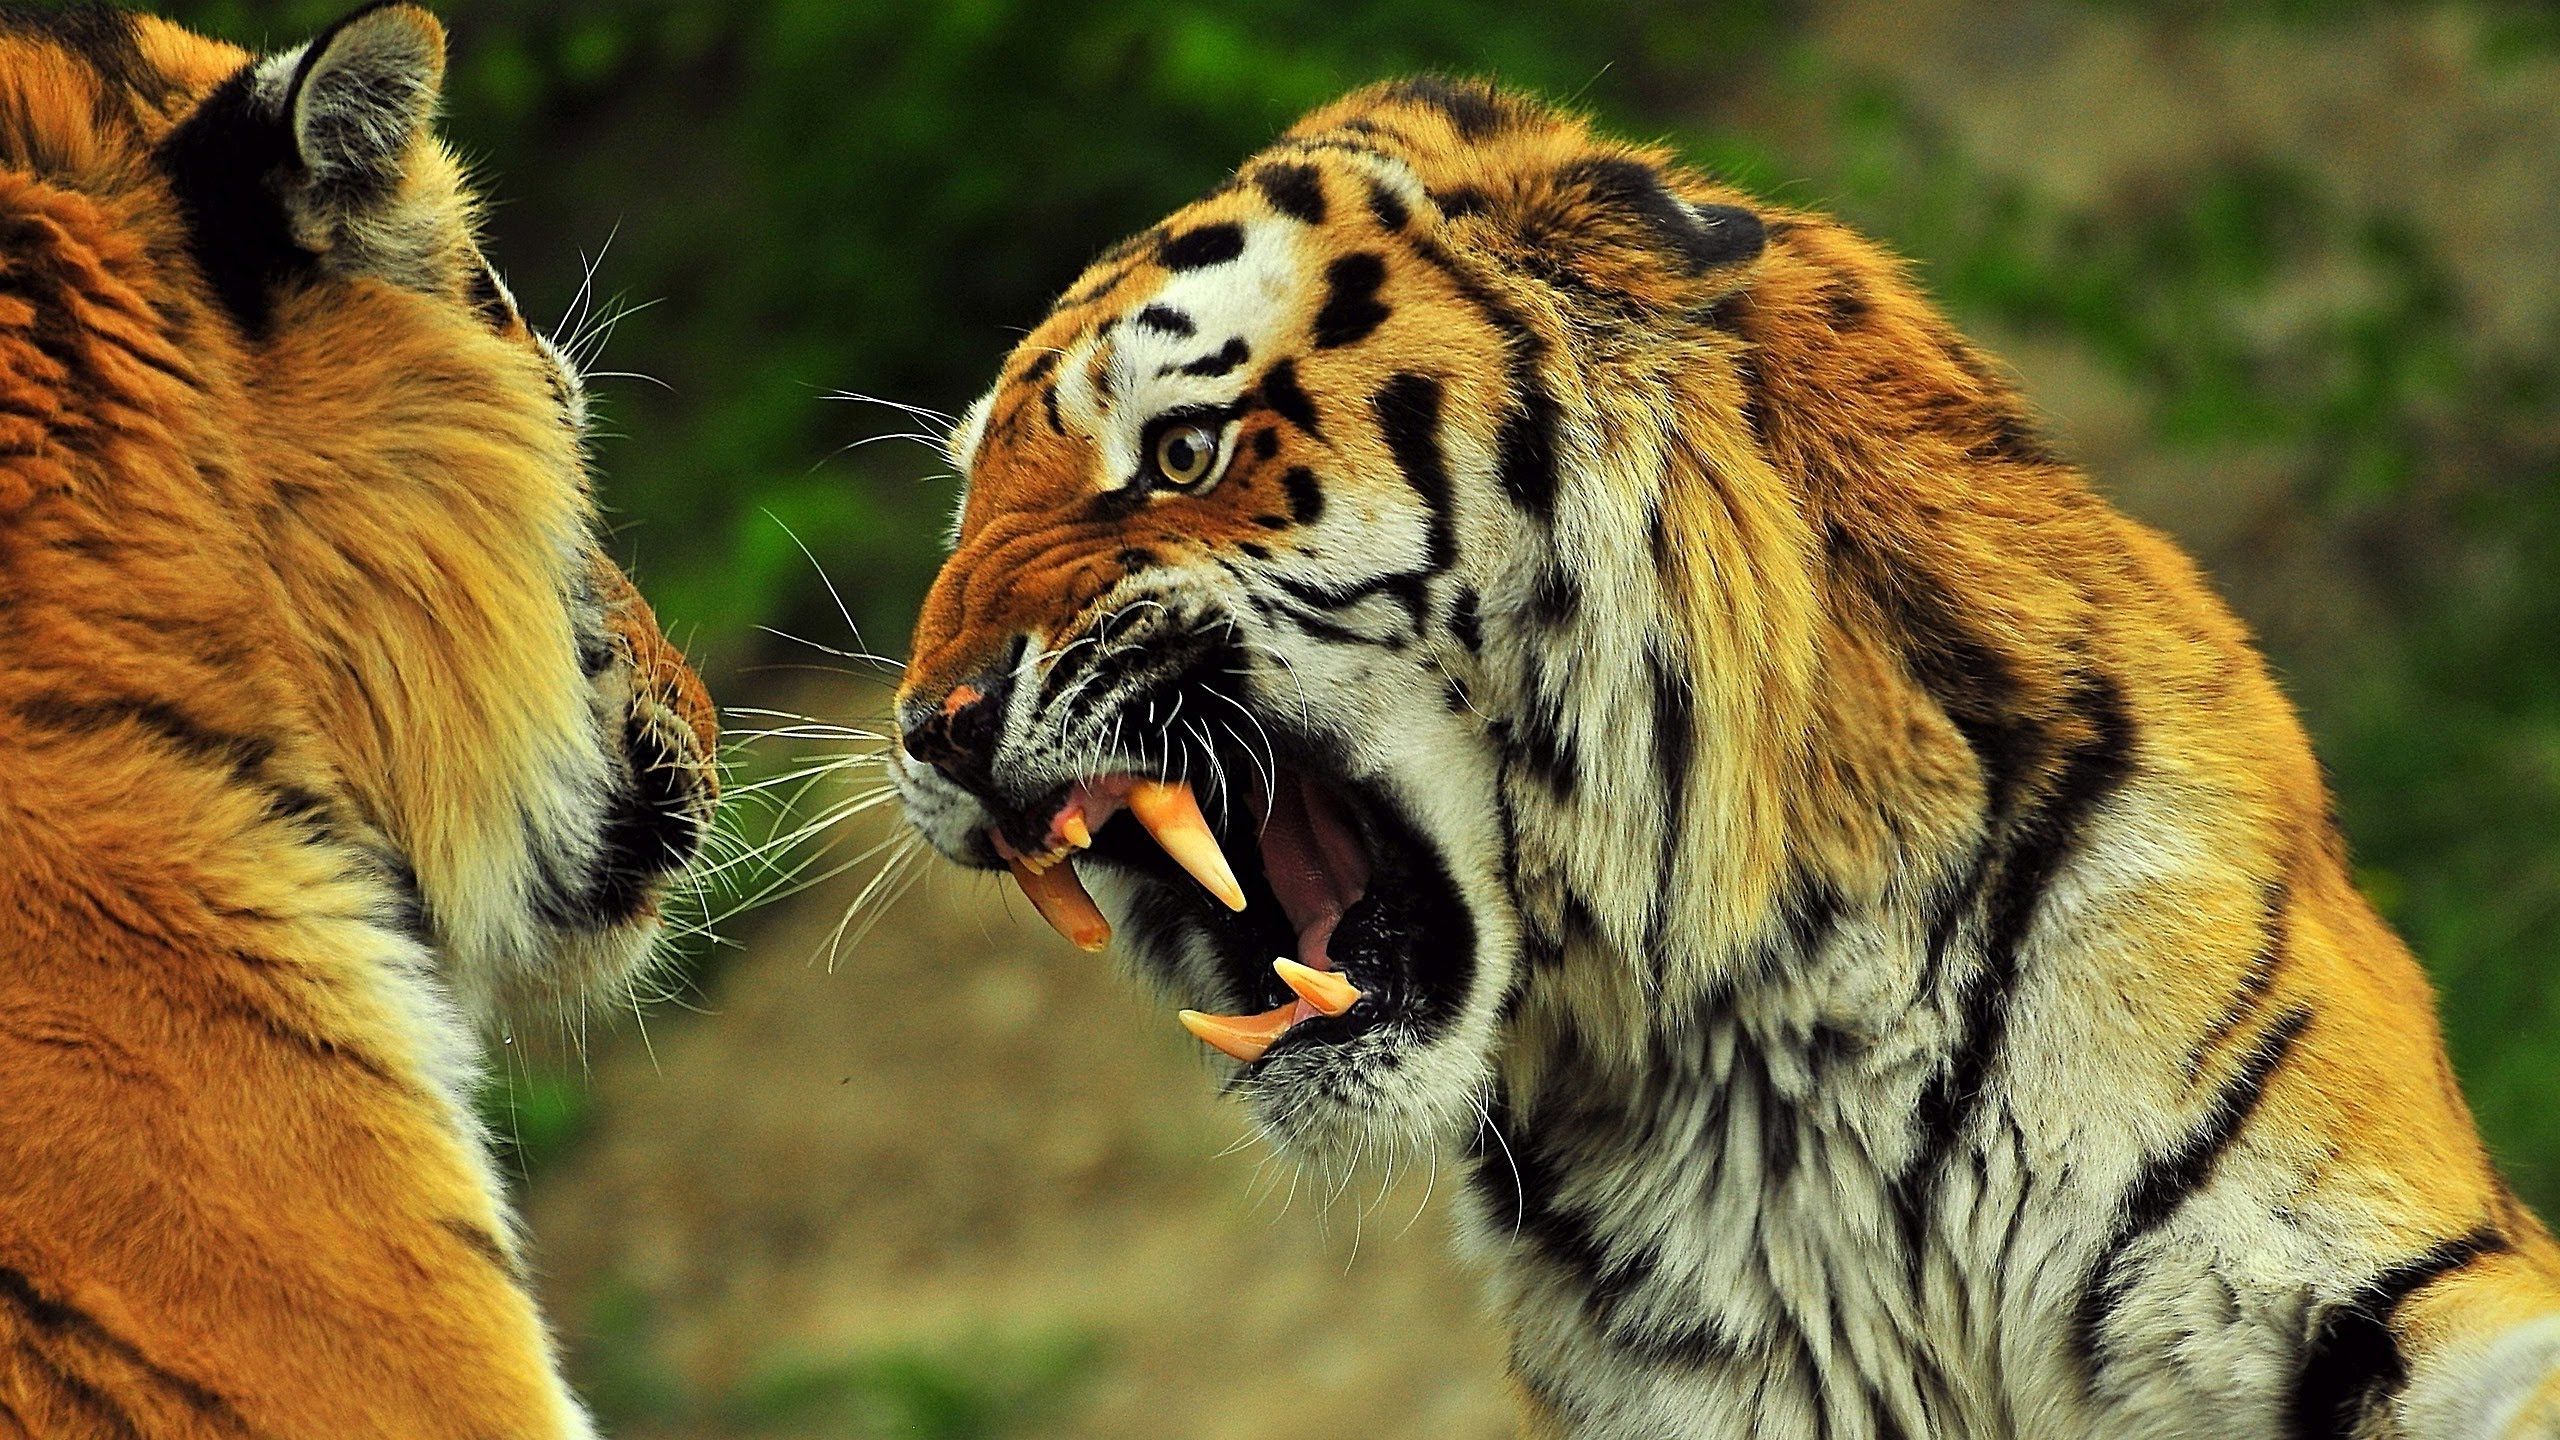 Tiger VS Lion (Roar) - YouTube